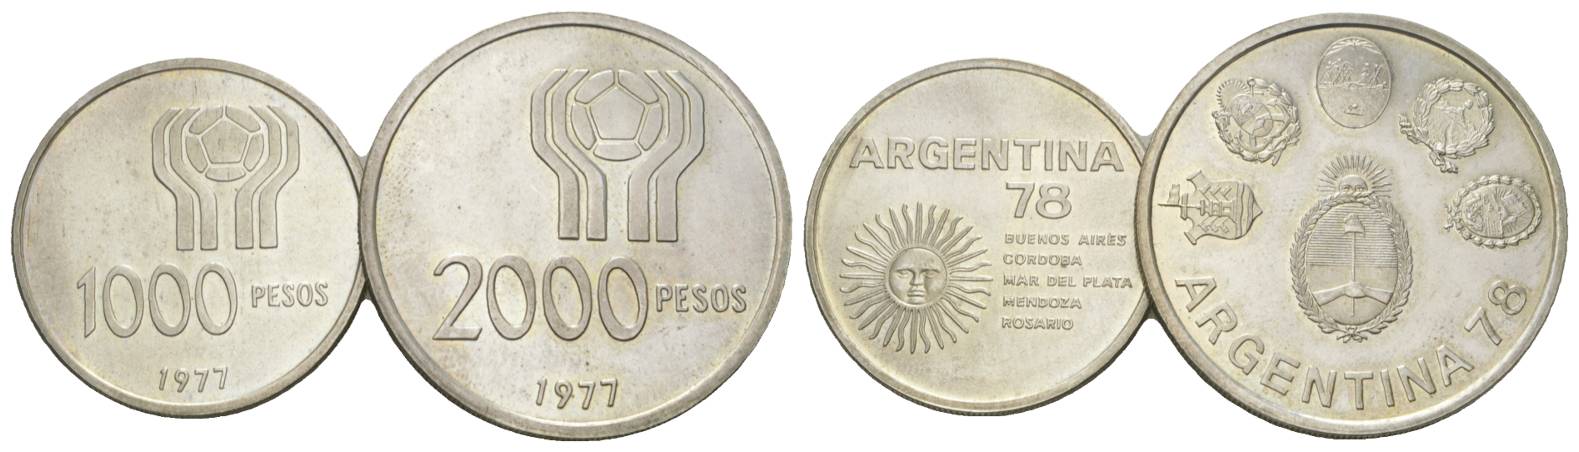  Argentinien Fussball WM 1978 - Weltkugel , 1000/2000 Pesos 1977   